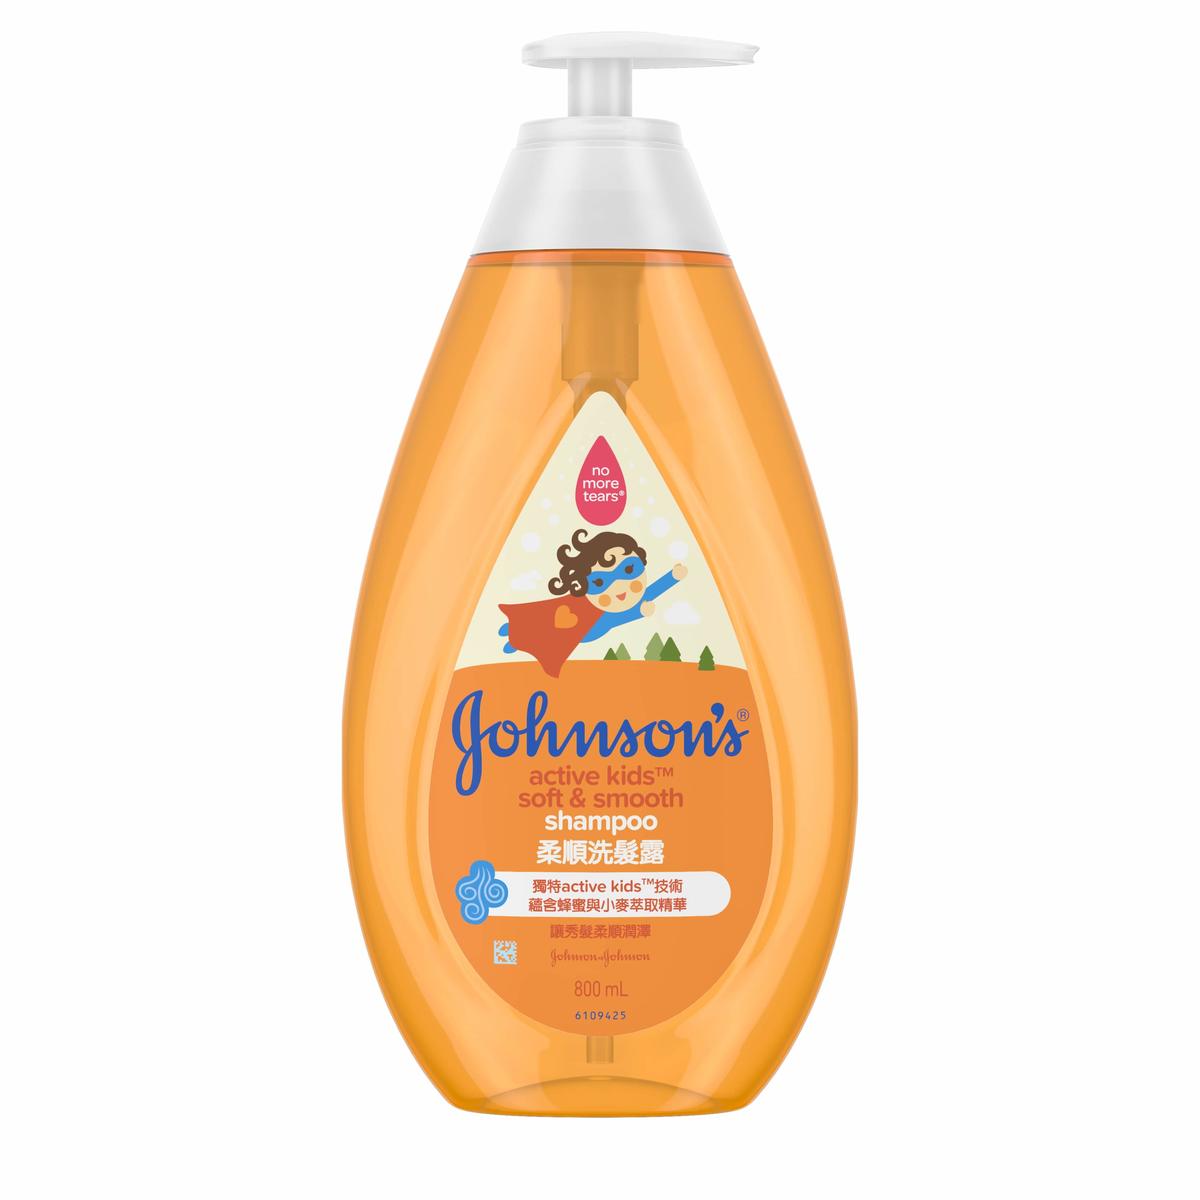 active-kids-soft-smooth-shampoo-800ml-front.jpg